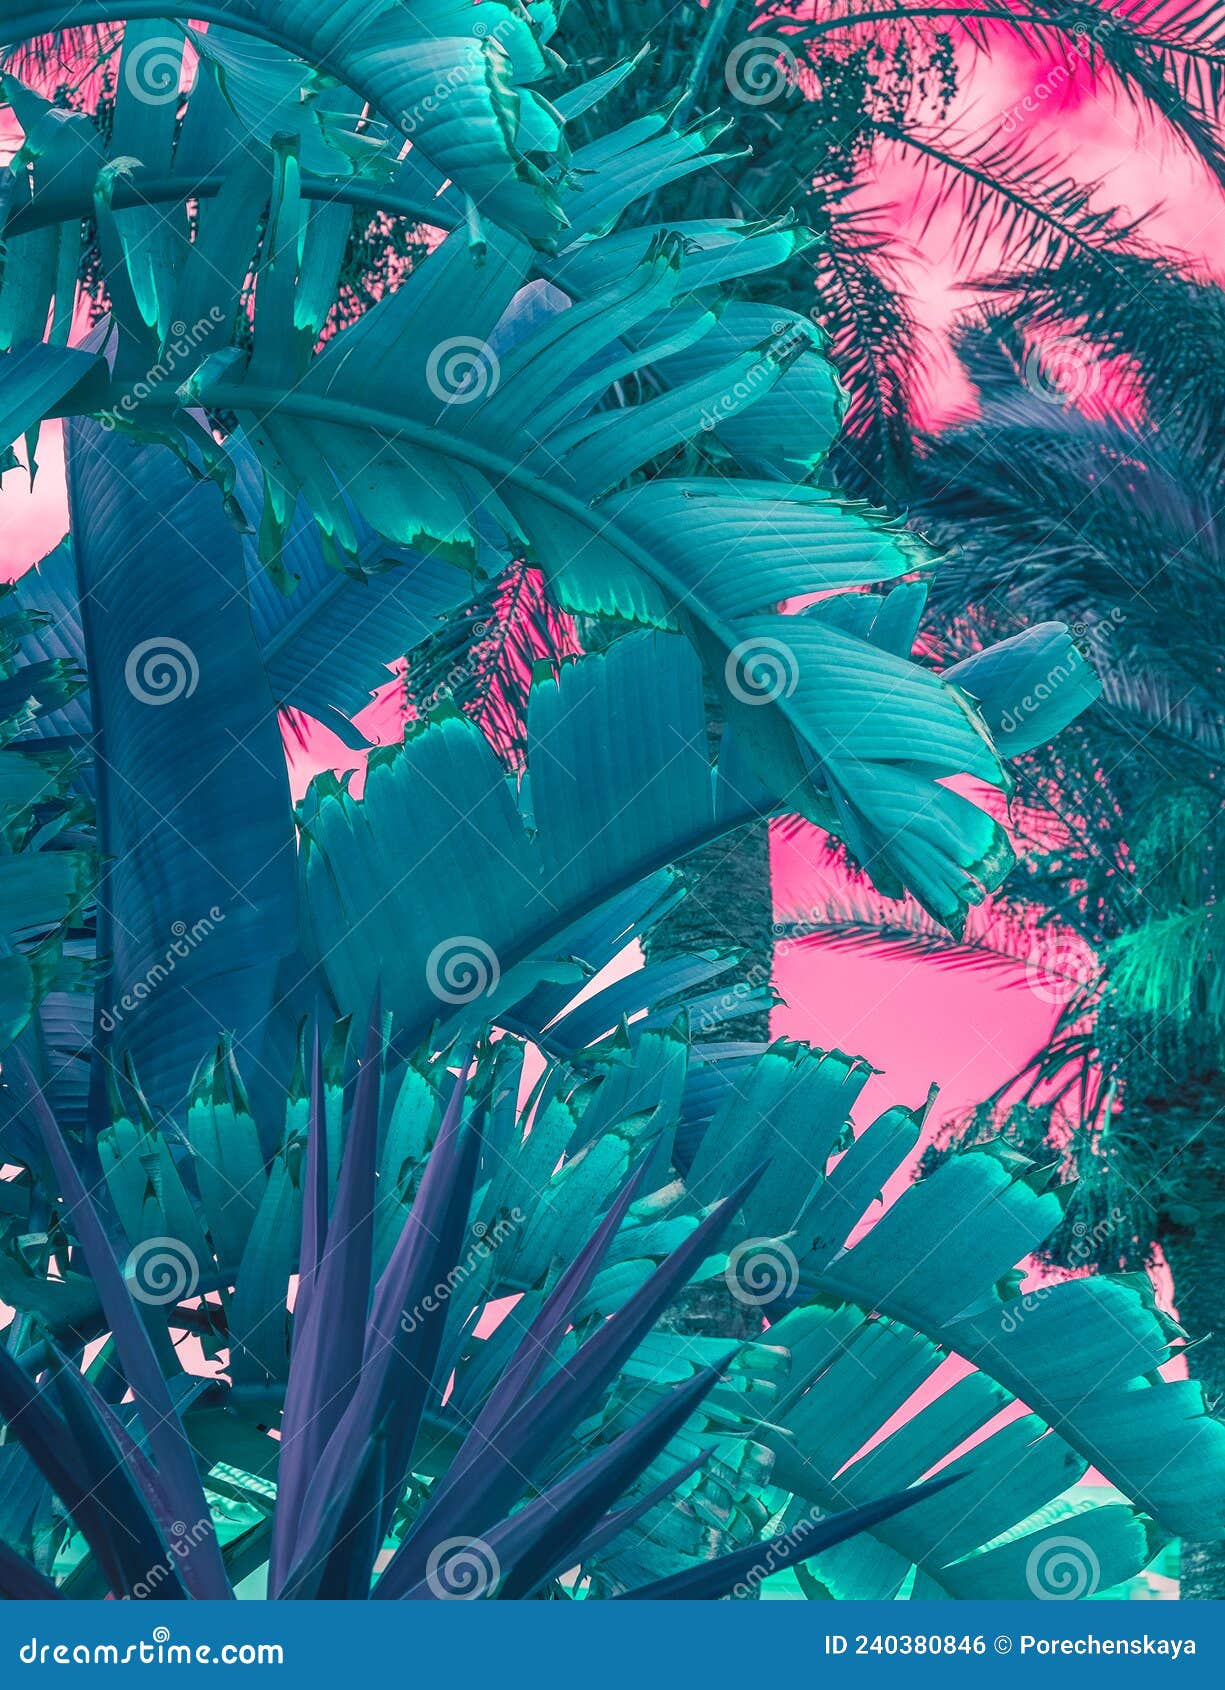 aesthetic palm tree wallpaper